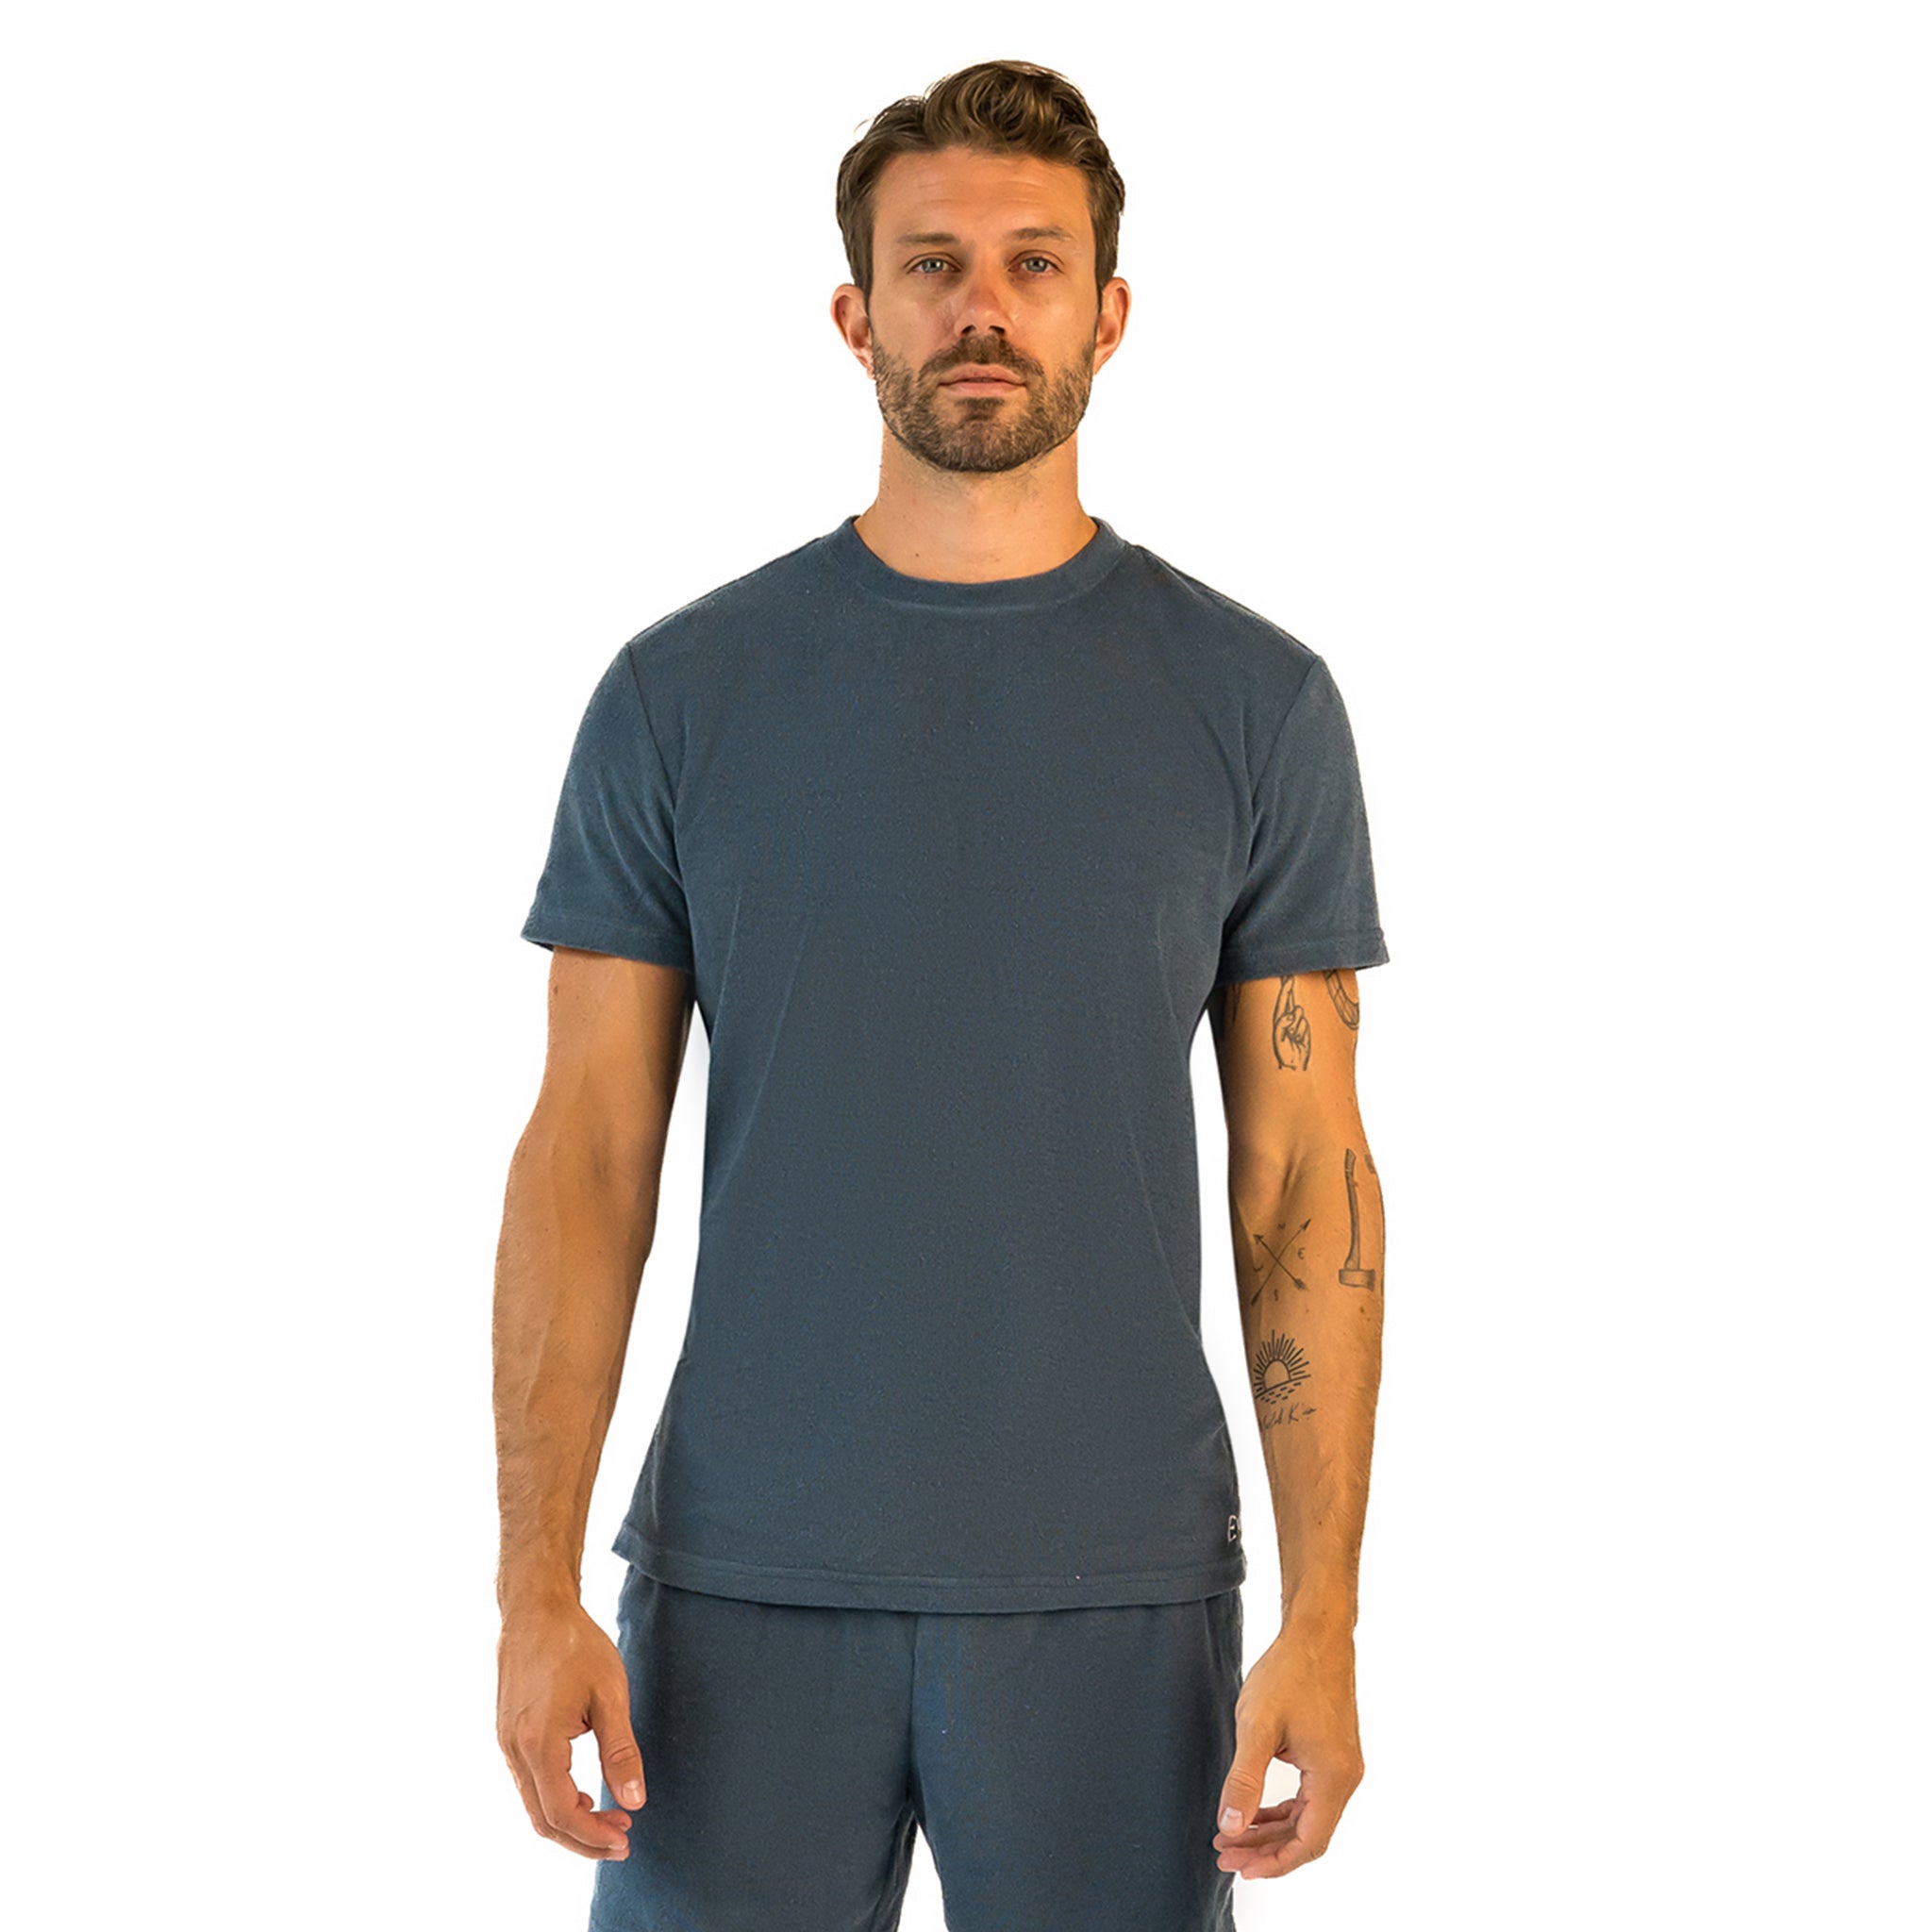 Terry T-shirt / Charcoal Navy